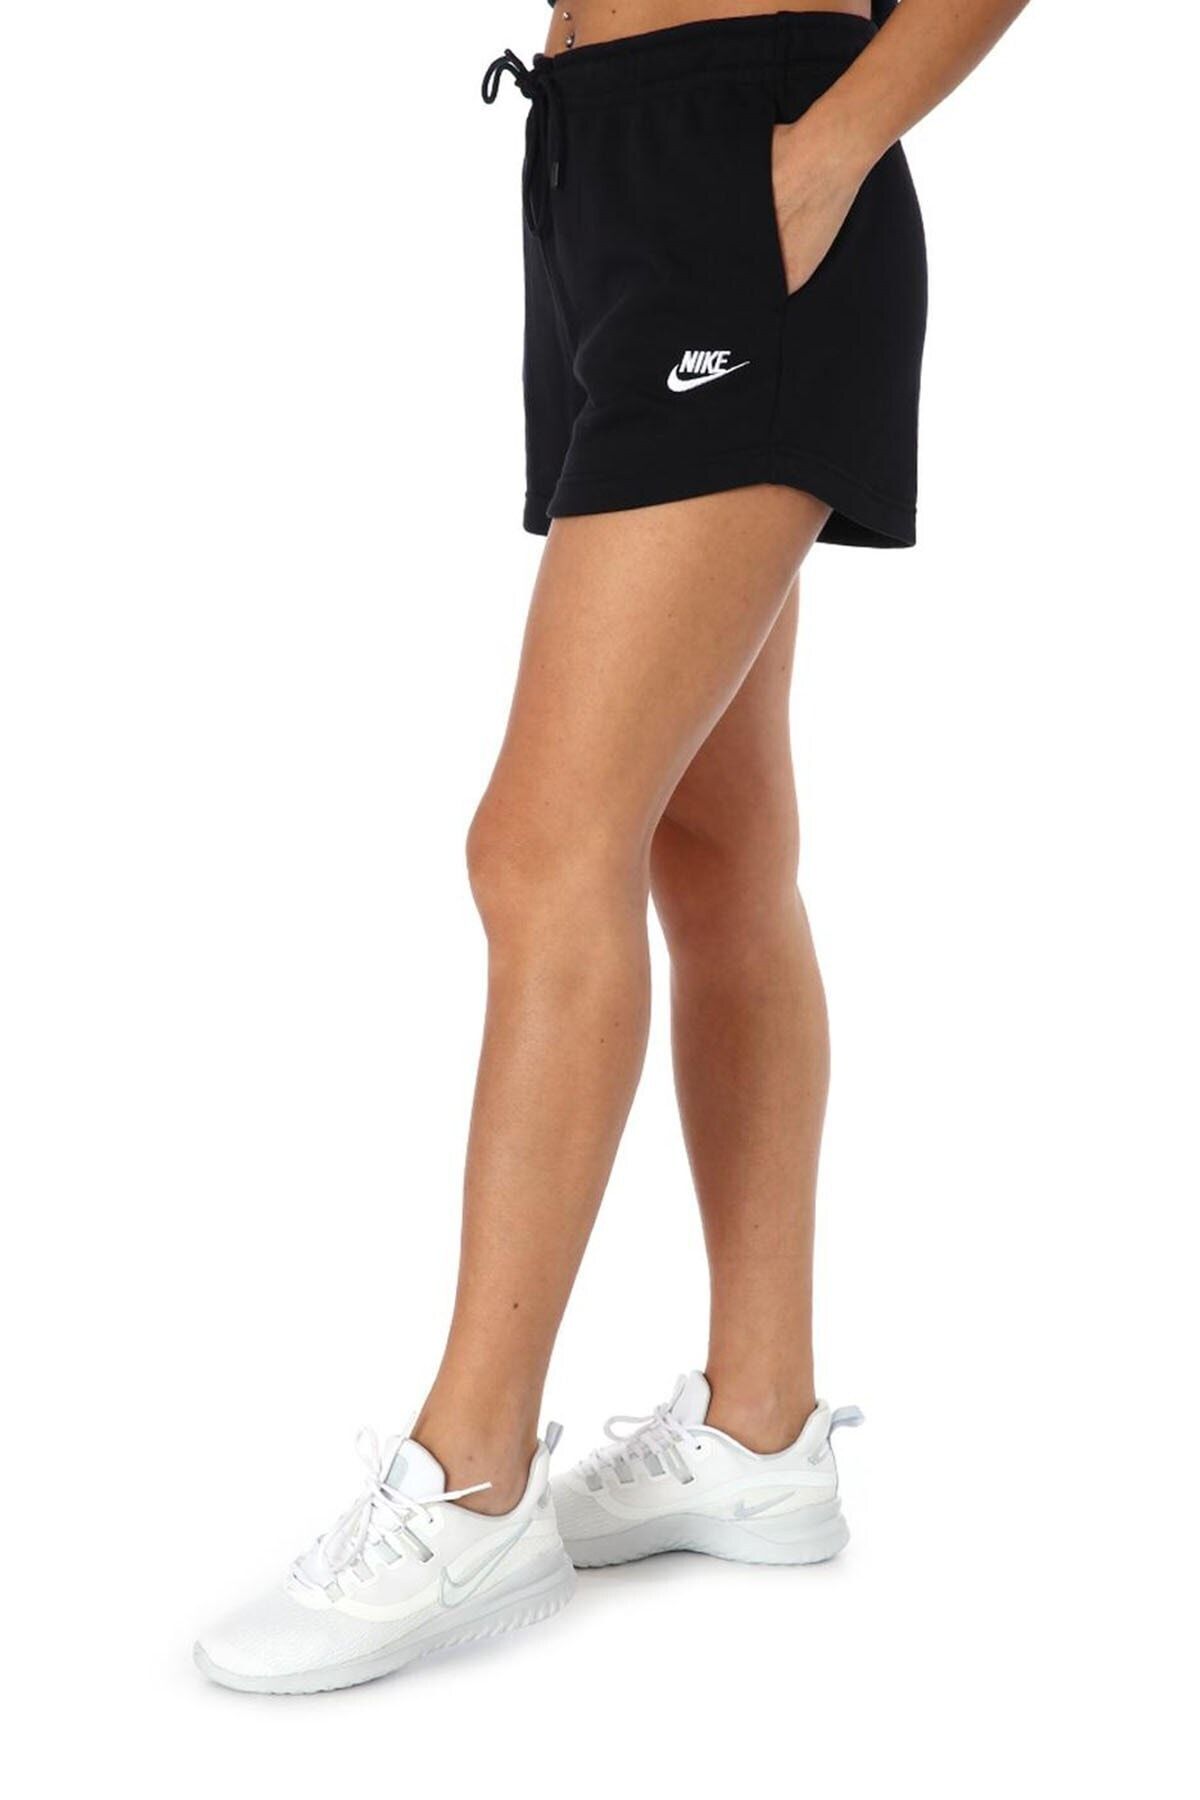 Nike Shorts Womens Large Pink Sportswear Athletic Sweat Shorts